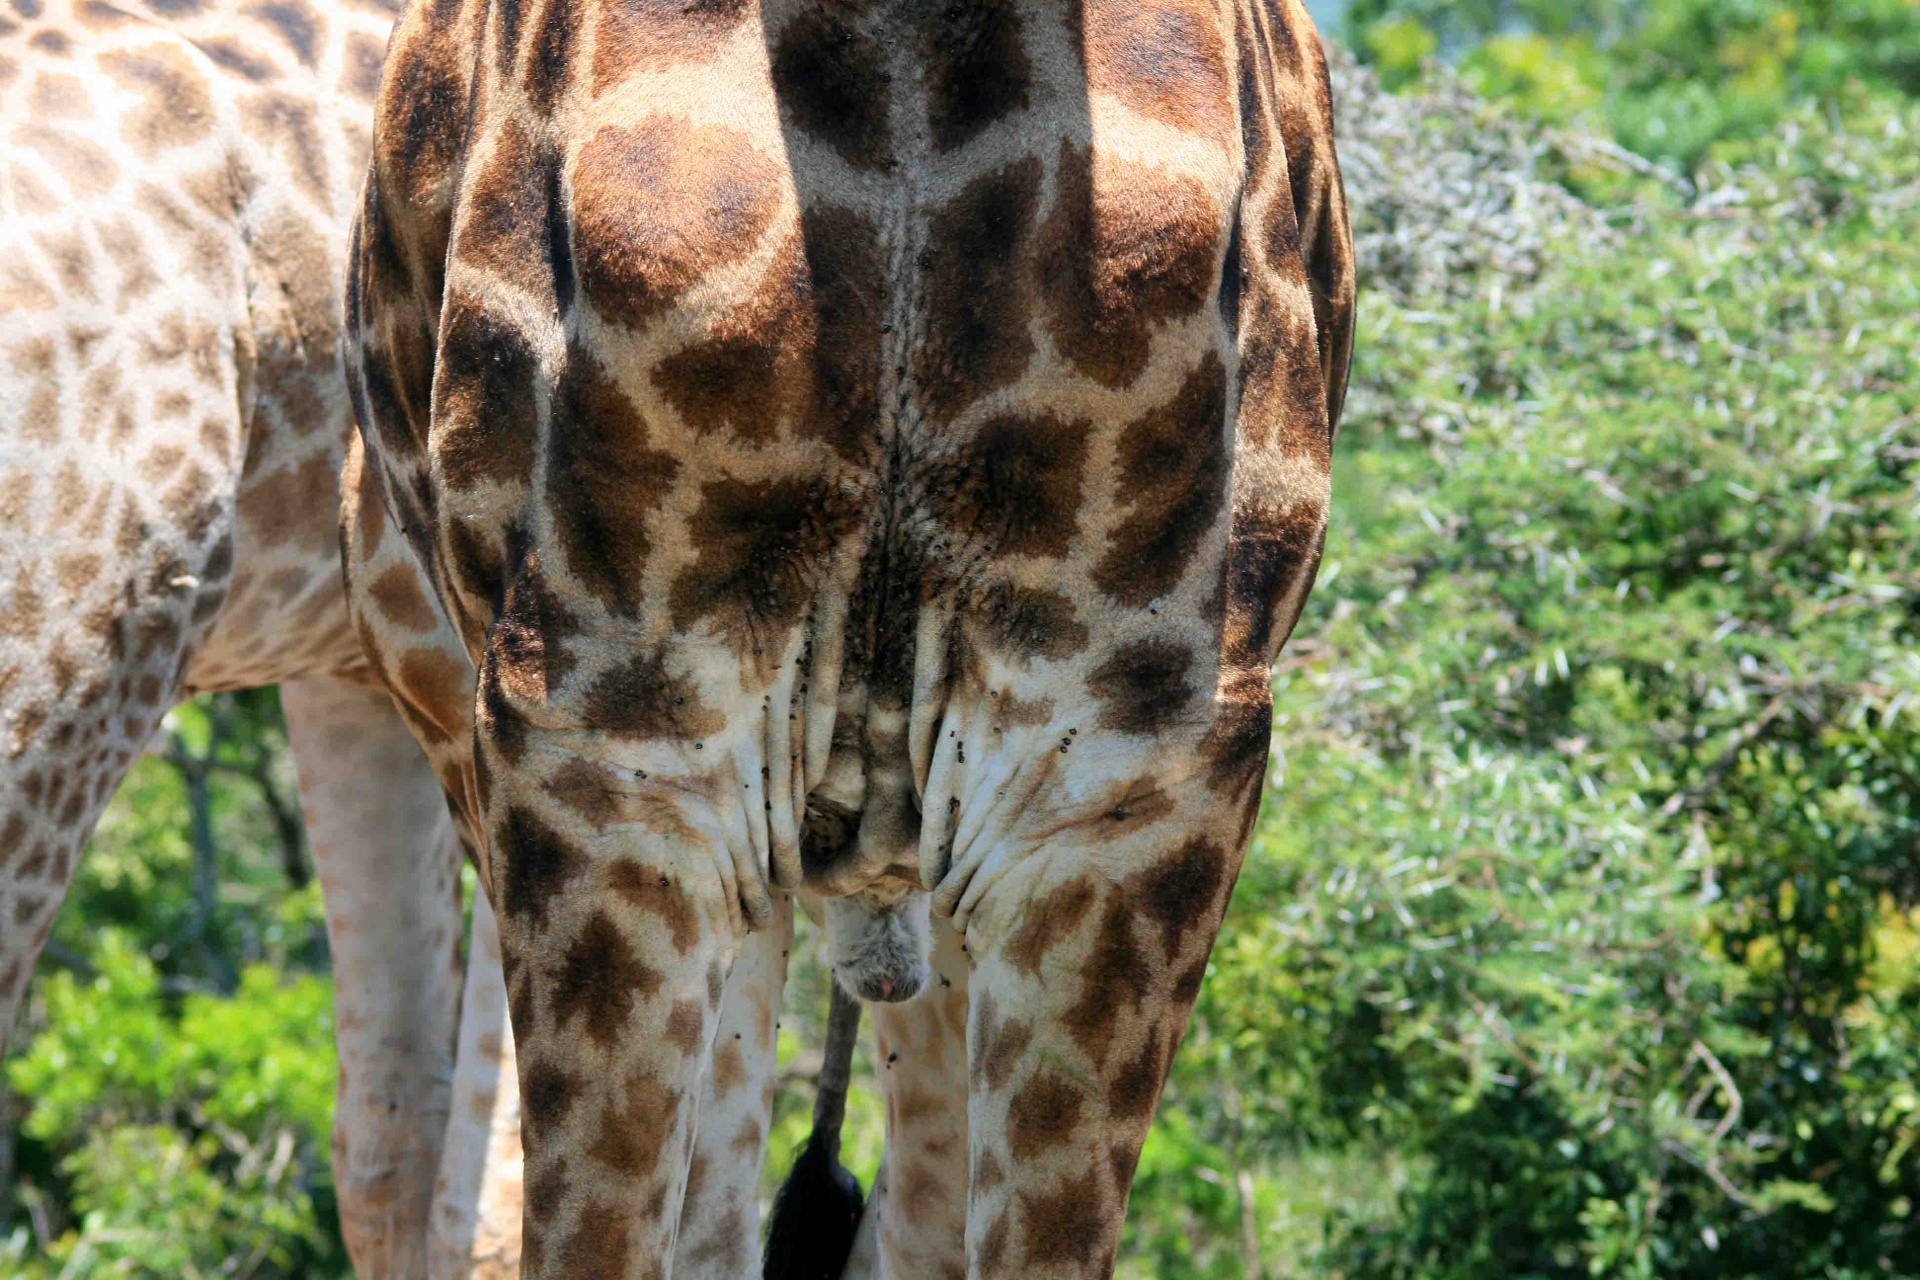 член у жирафа длина фото 63